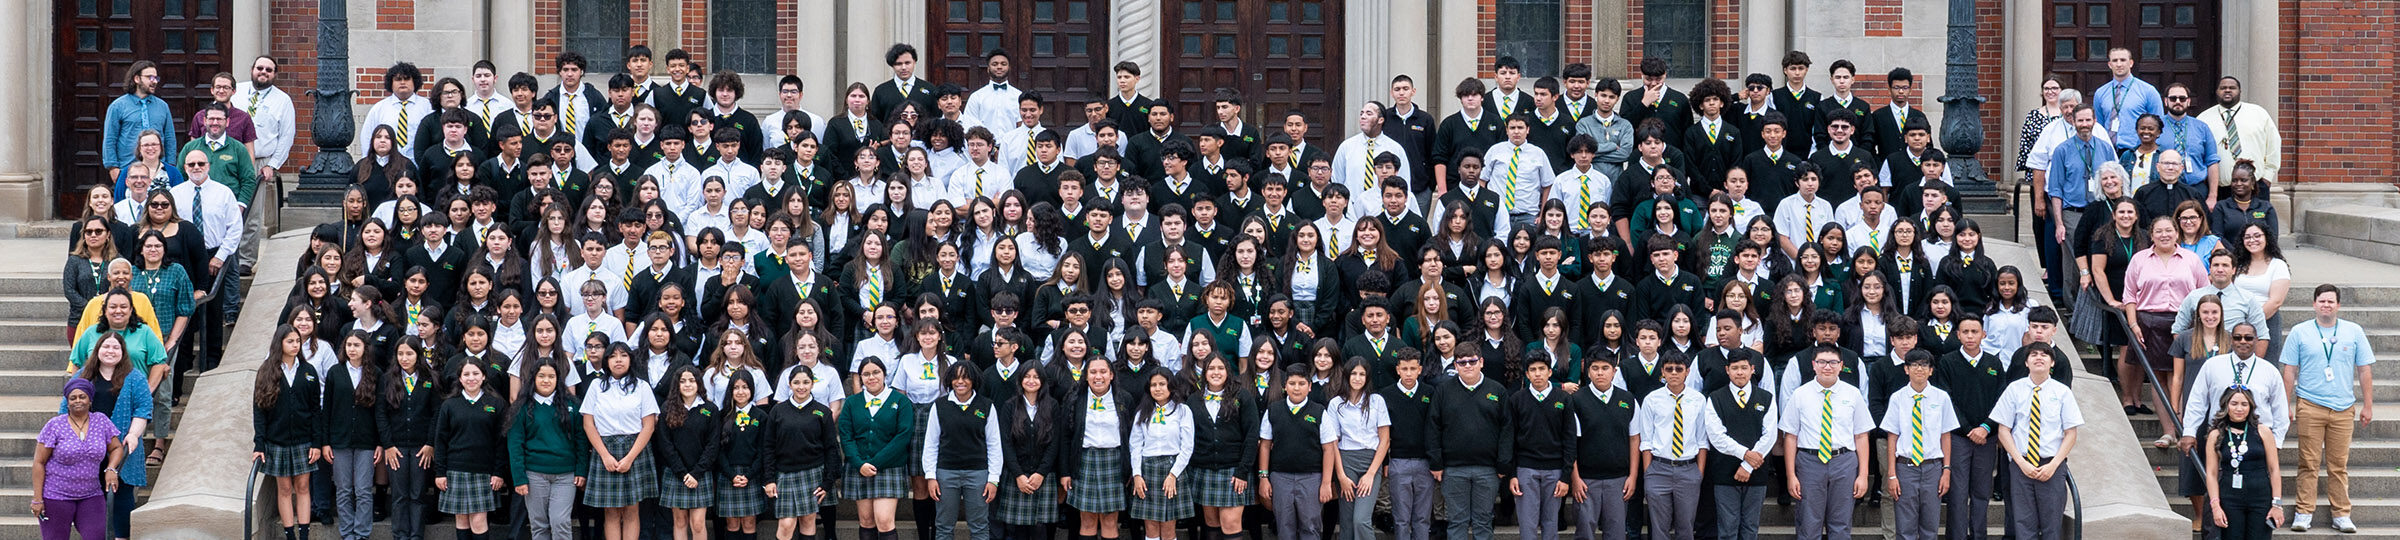 Detroit Cristo Rey High School students and teachers